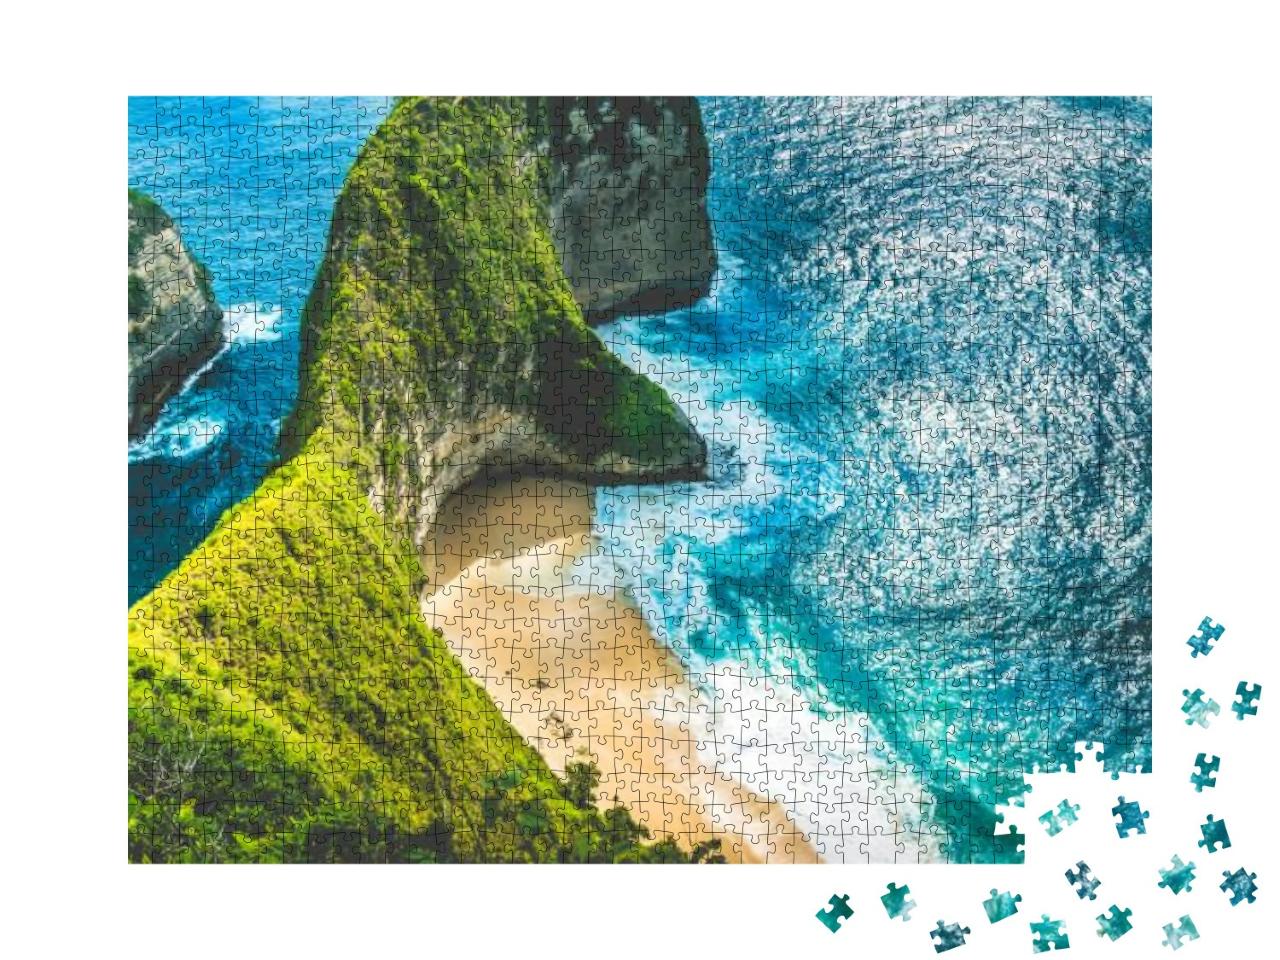 Manta Bay or Kelingking Beach on NUSA Penida Island, Bali... Jigsaw Puzzle with 1000 pieces